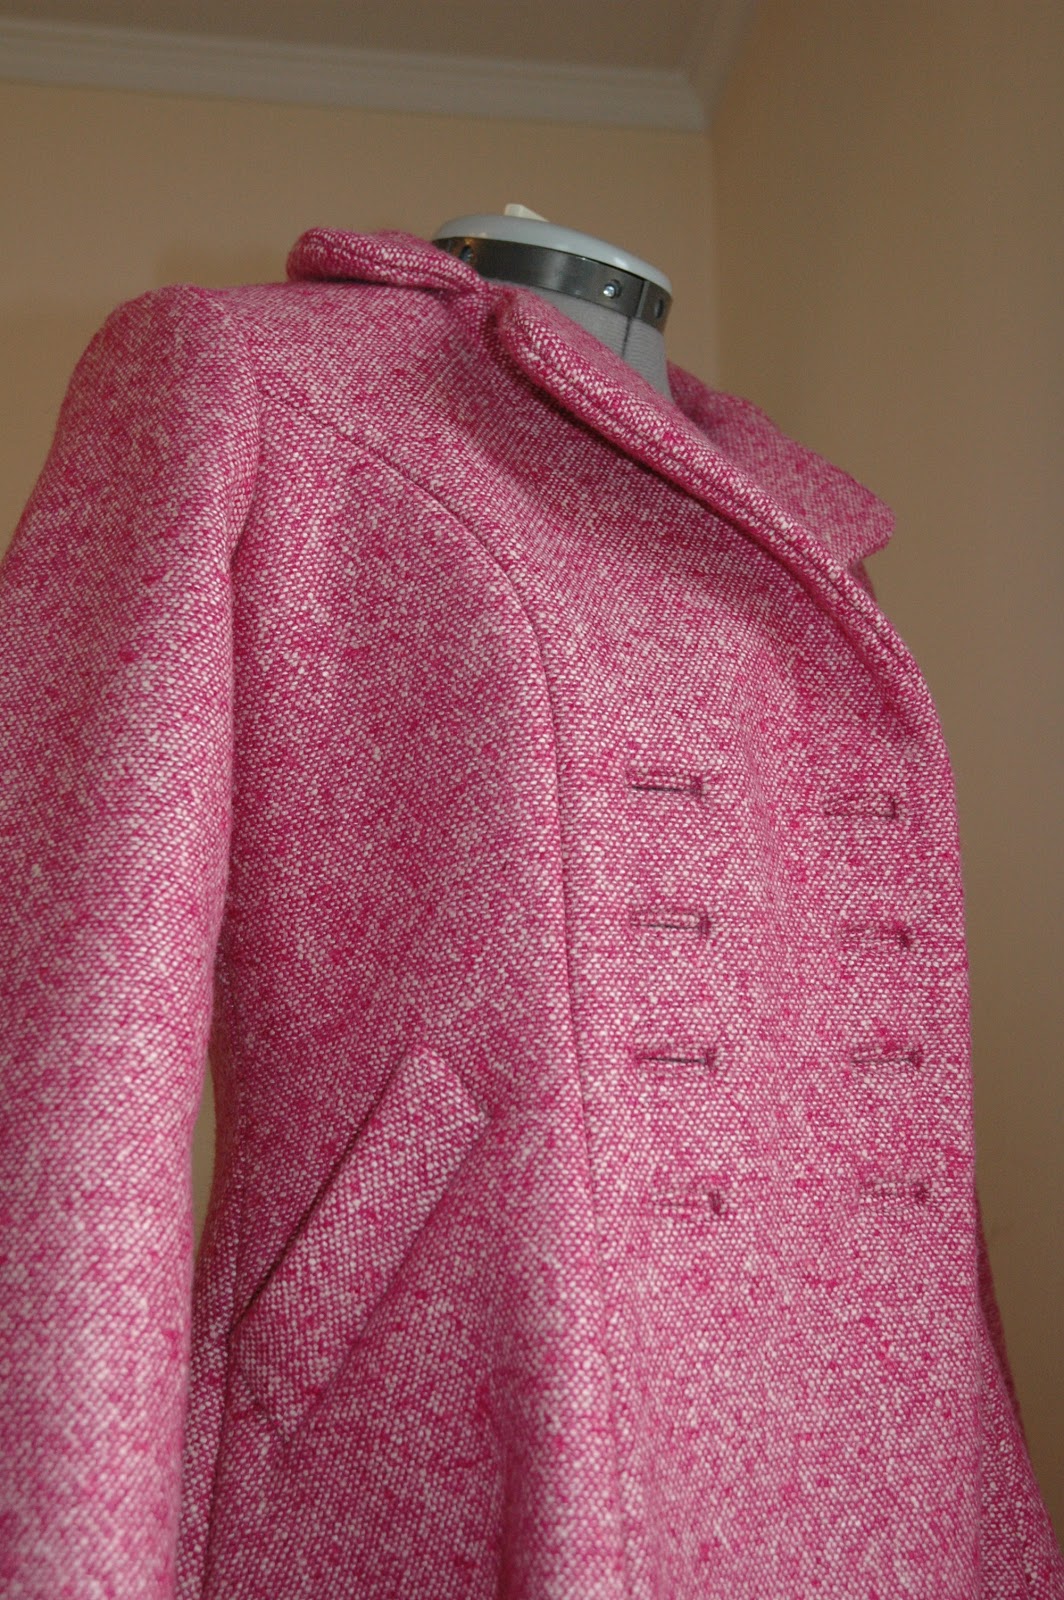 The Dior coat |pauline alice - Sewing patterns, tutorials, handmade ...